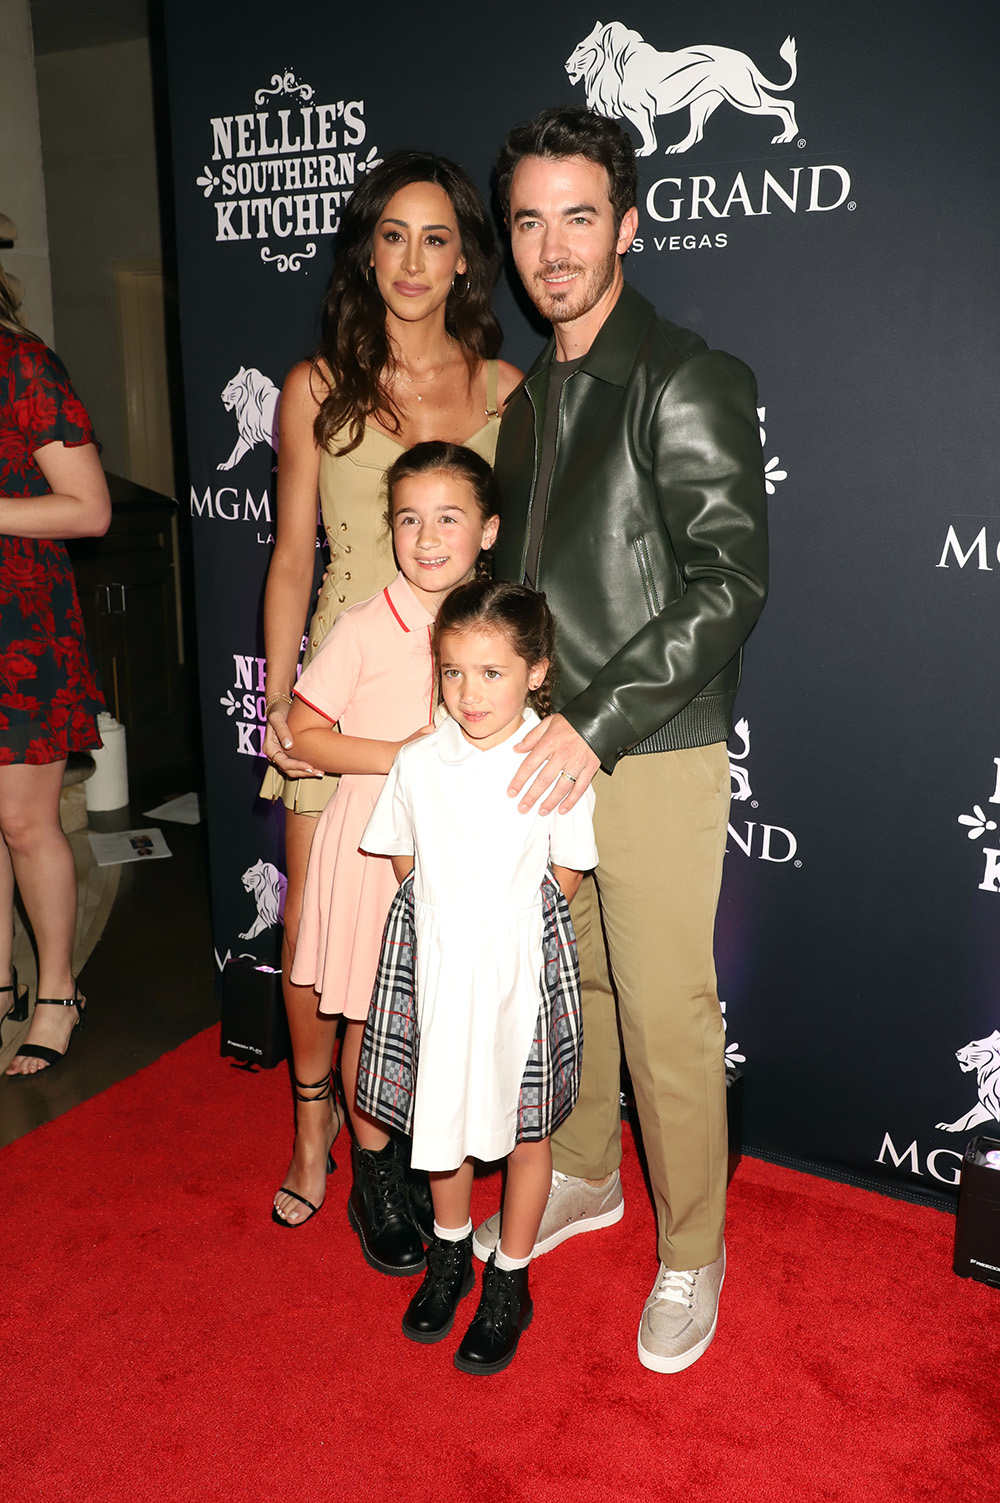 Kevin Jonas & Danielle Deleasa Pics: Photos Of The Adorable Family